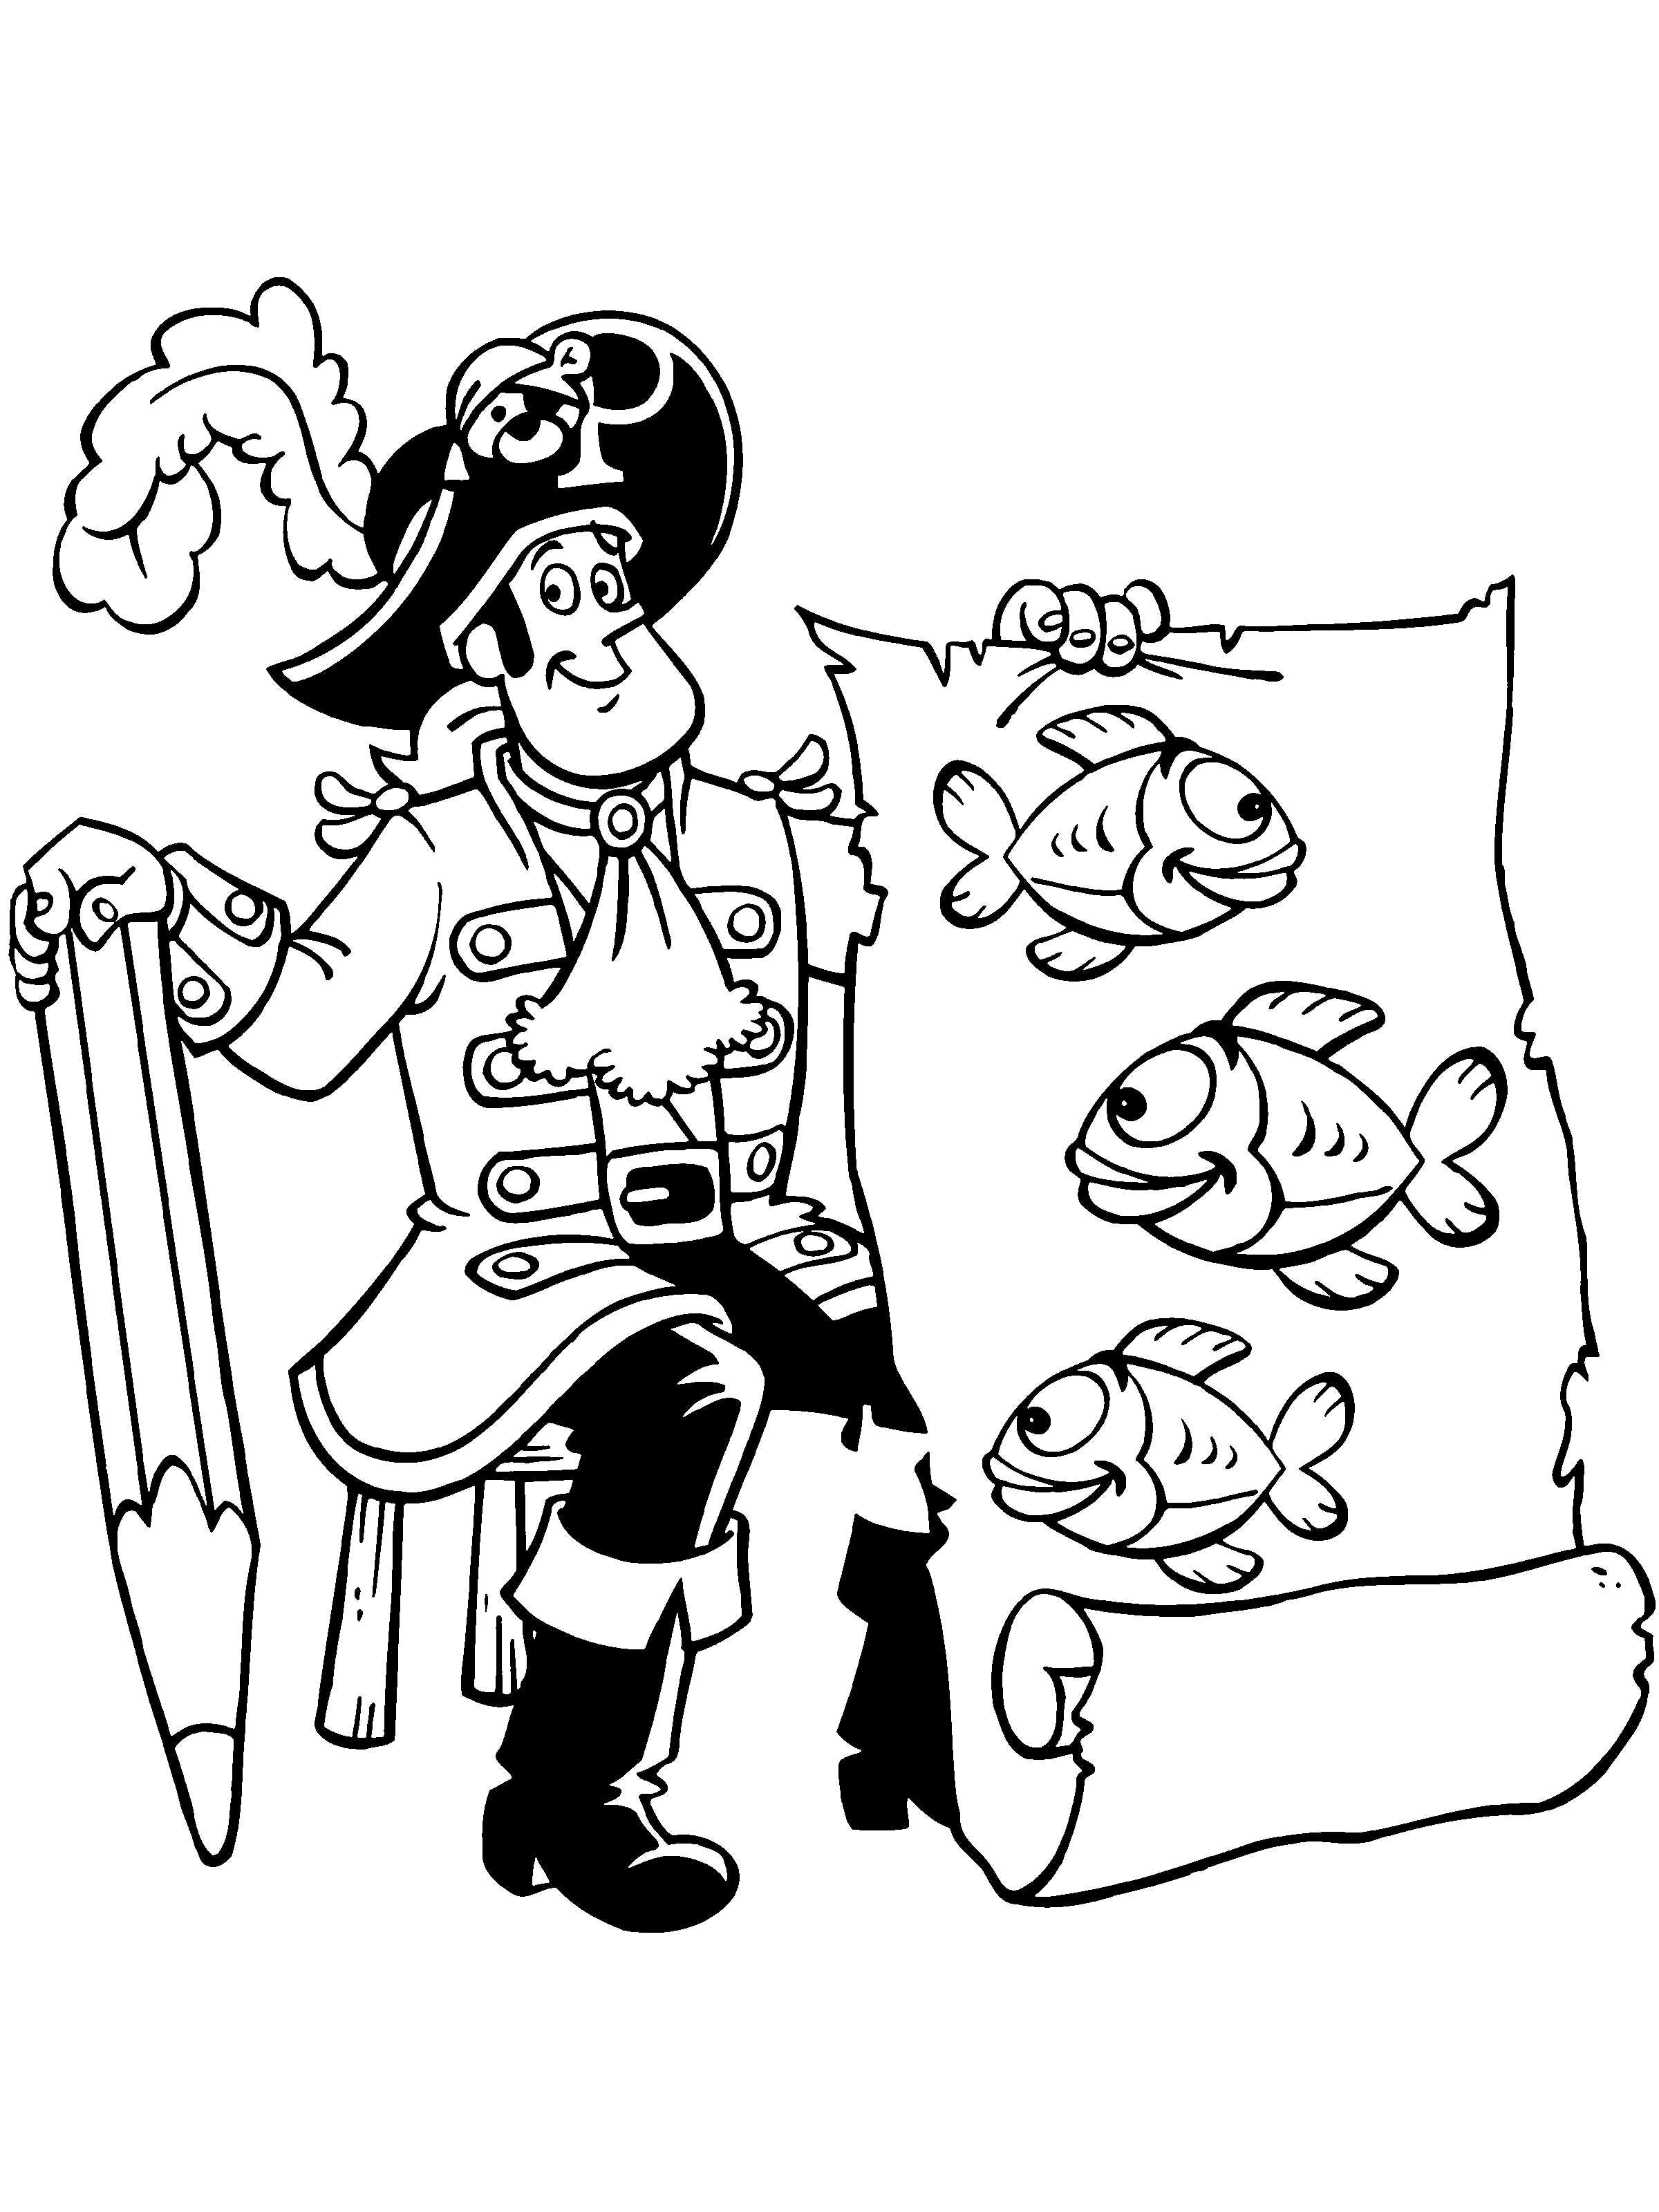 Piet pirate coloriages